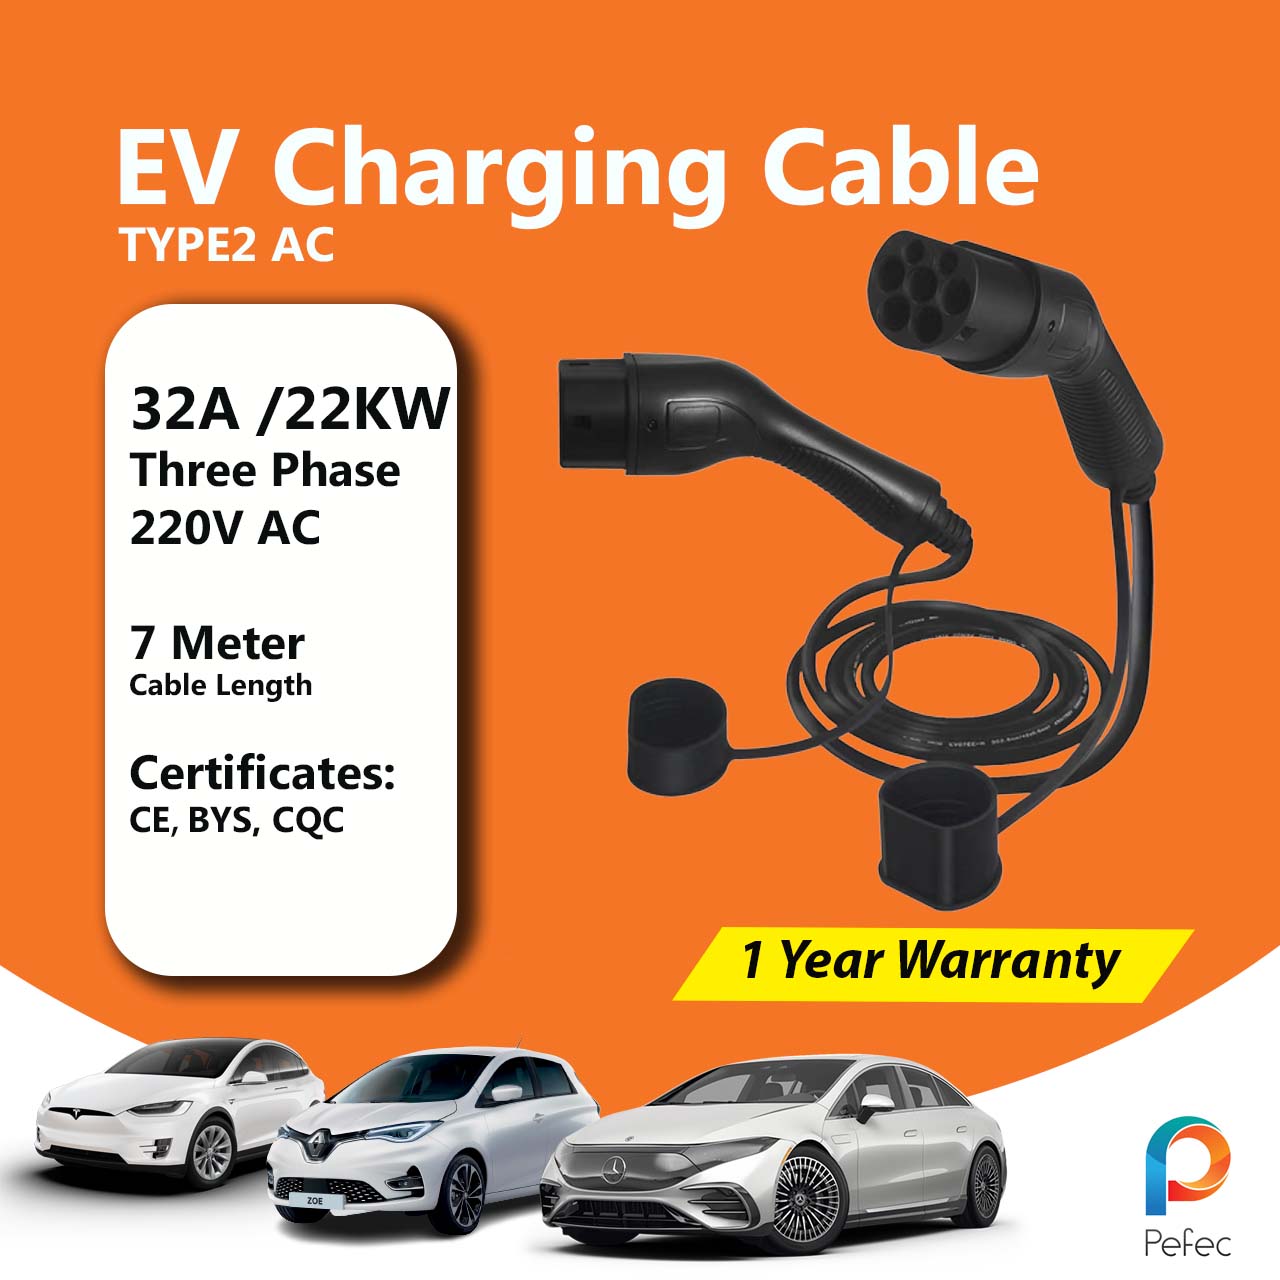 EV charging cable type 2 Tesla Porsche Taycan 22kw Public Charger Cable